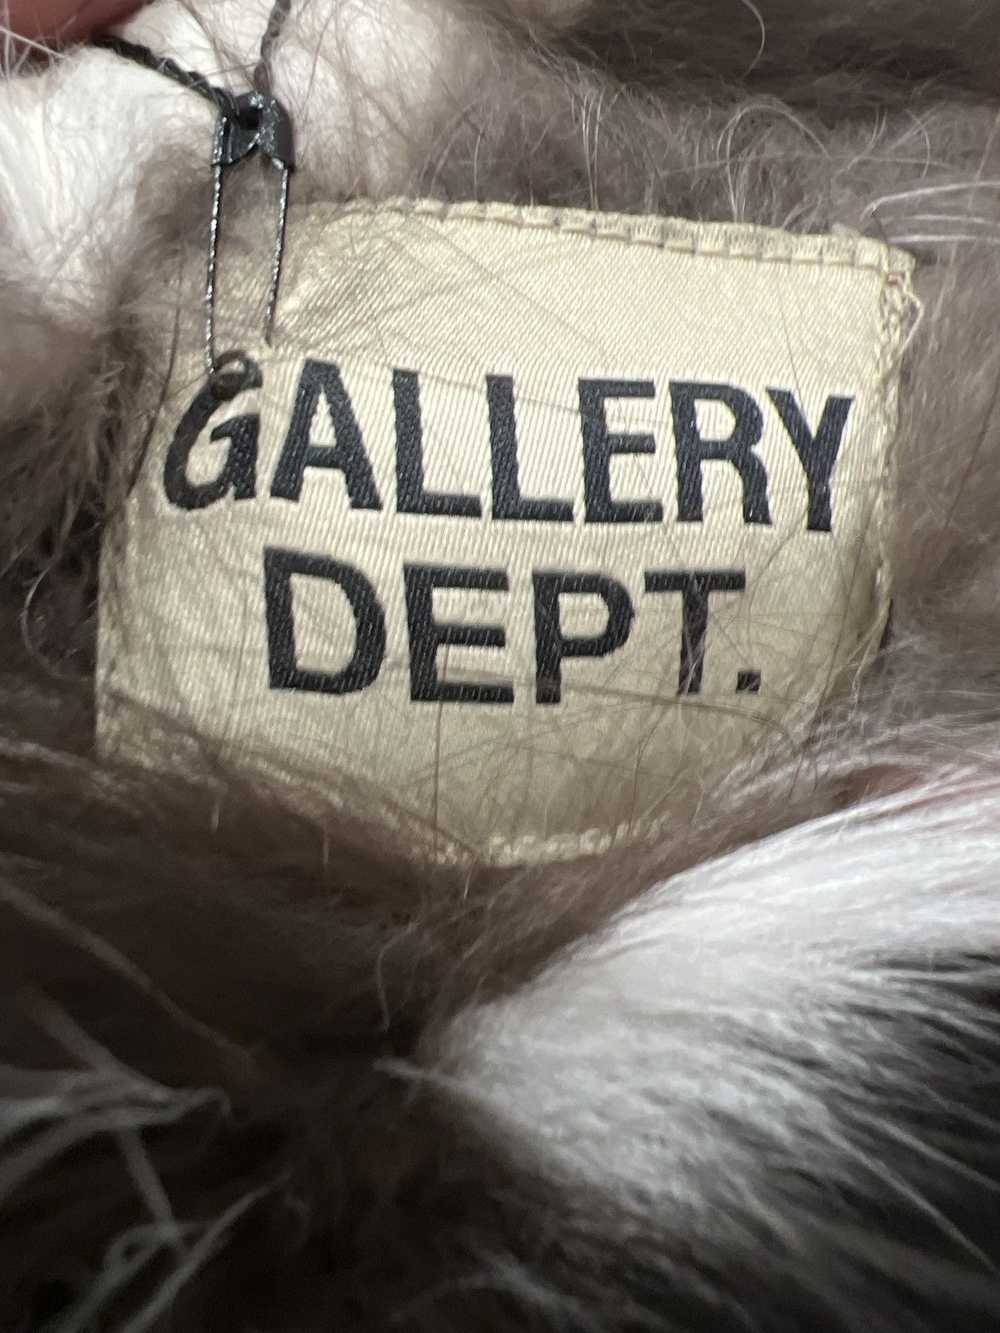 Gallery Dept. Gallery Dept Bear - image 4